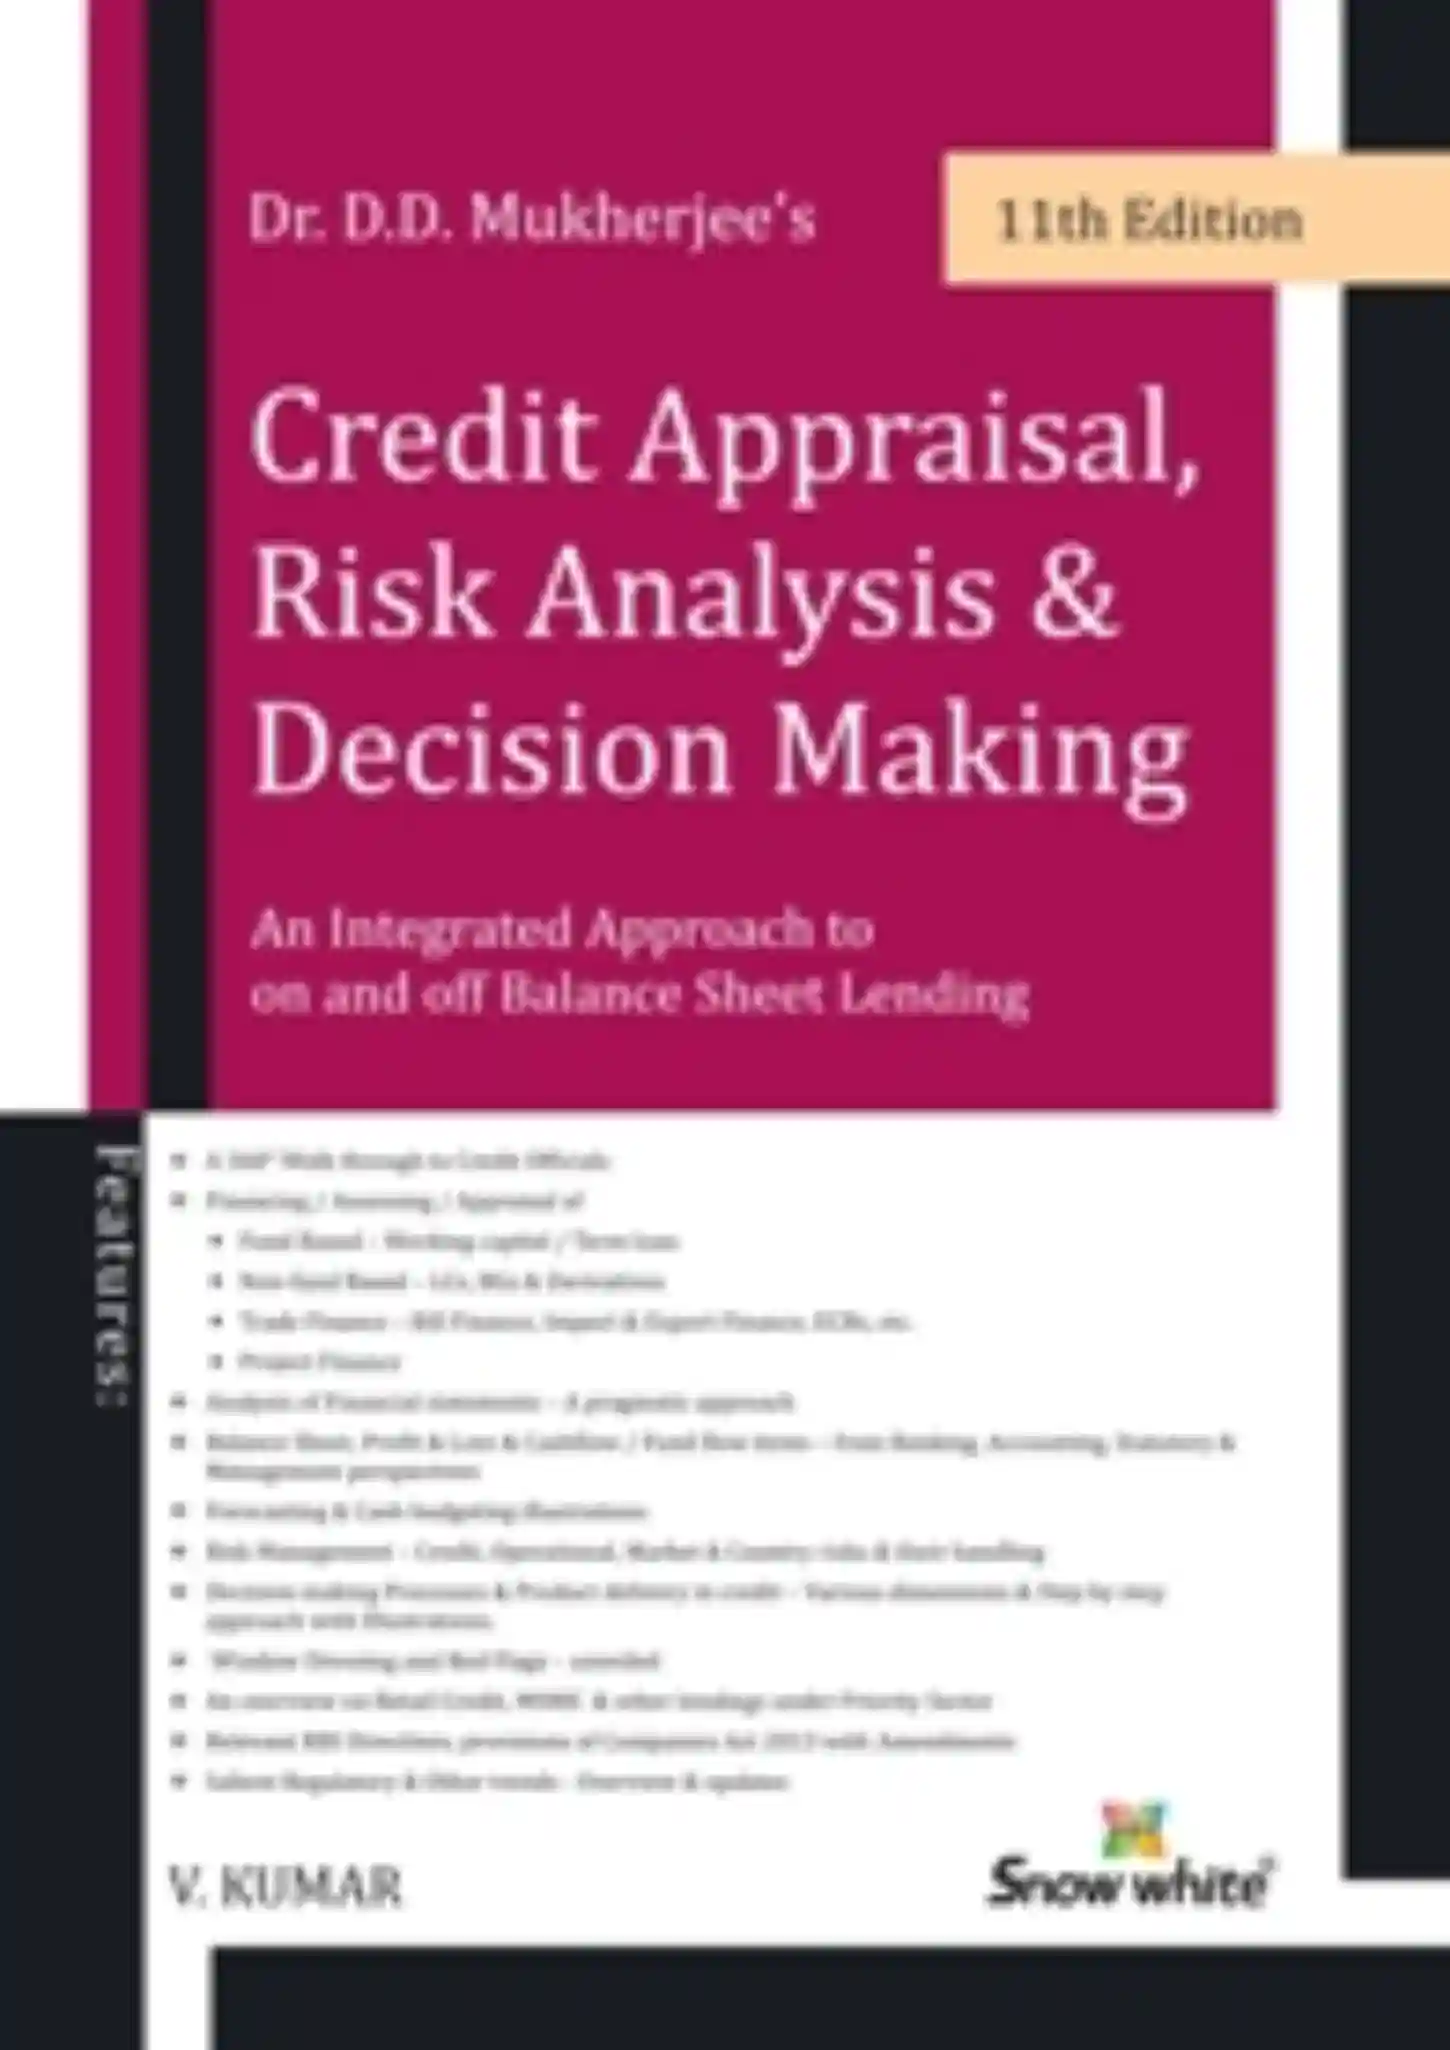 Credit Appraisal, Risk Analysis & Decision Making